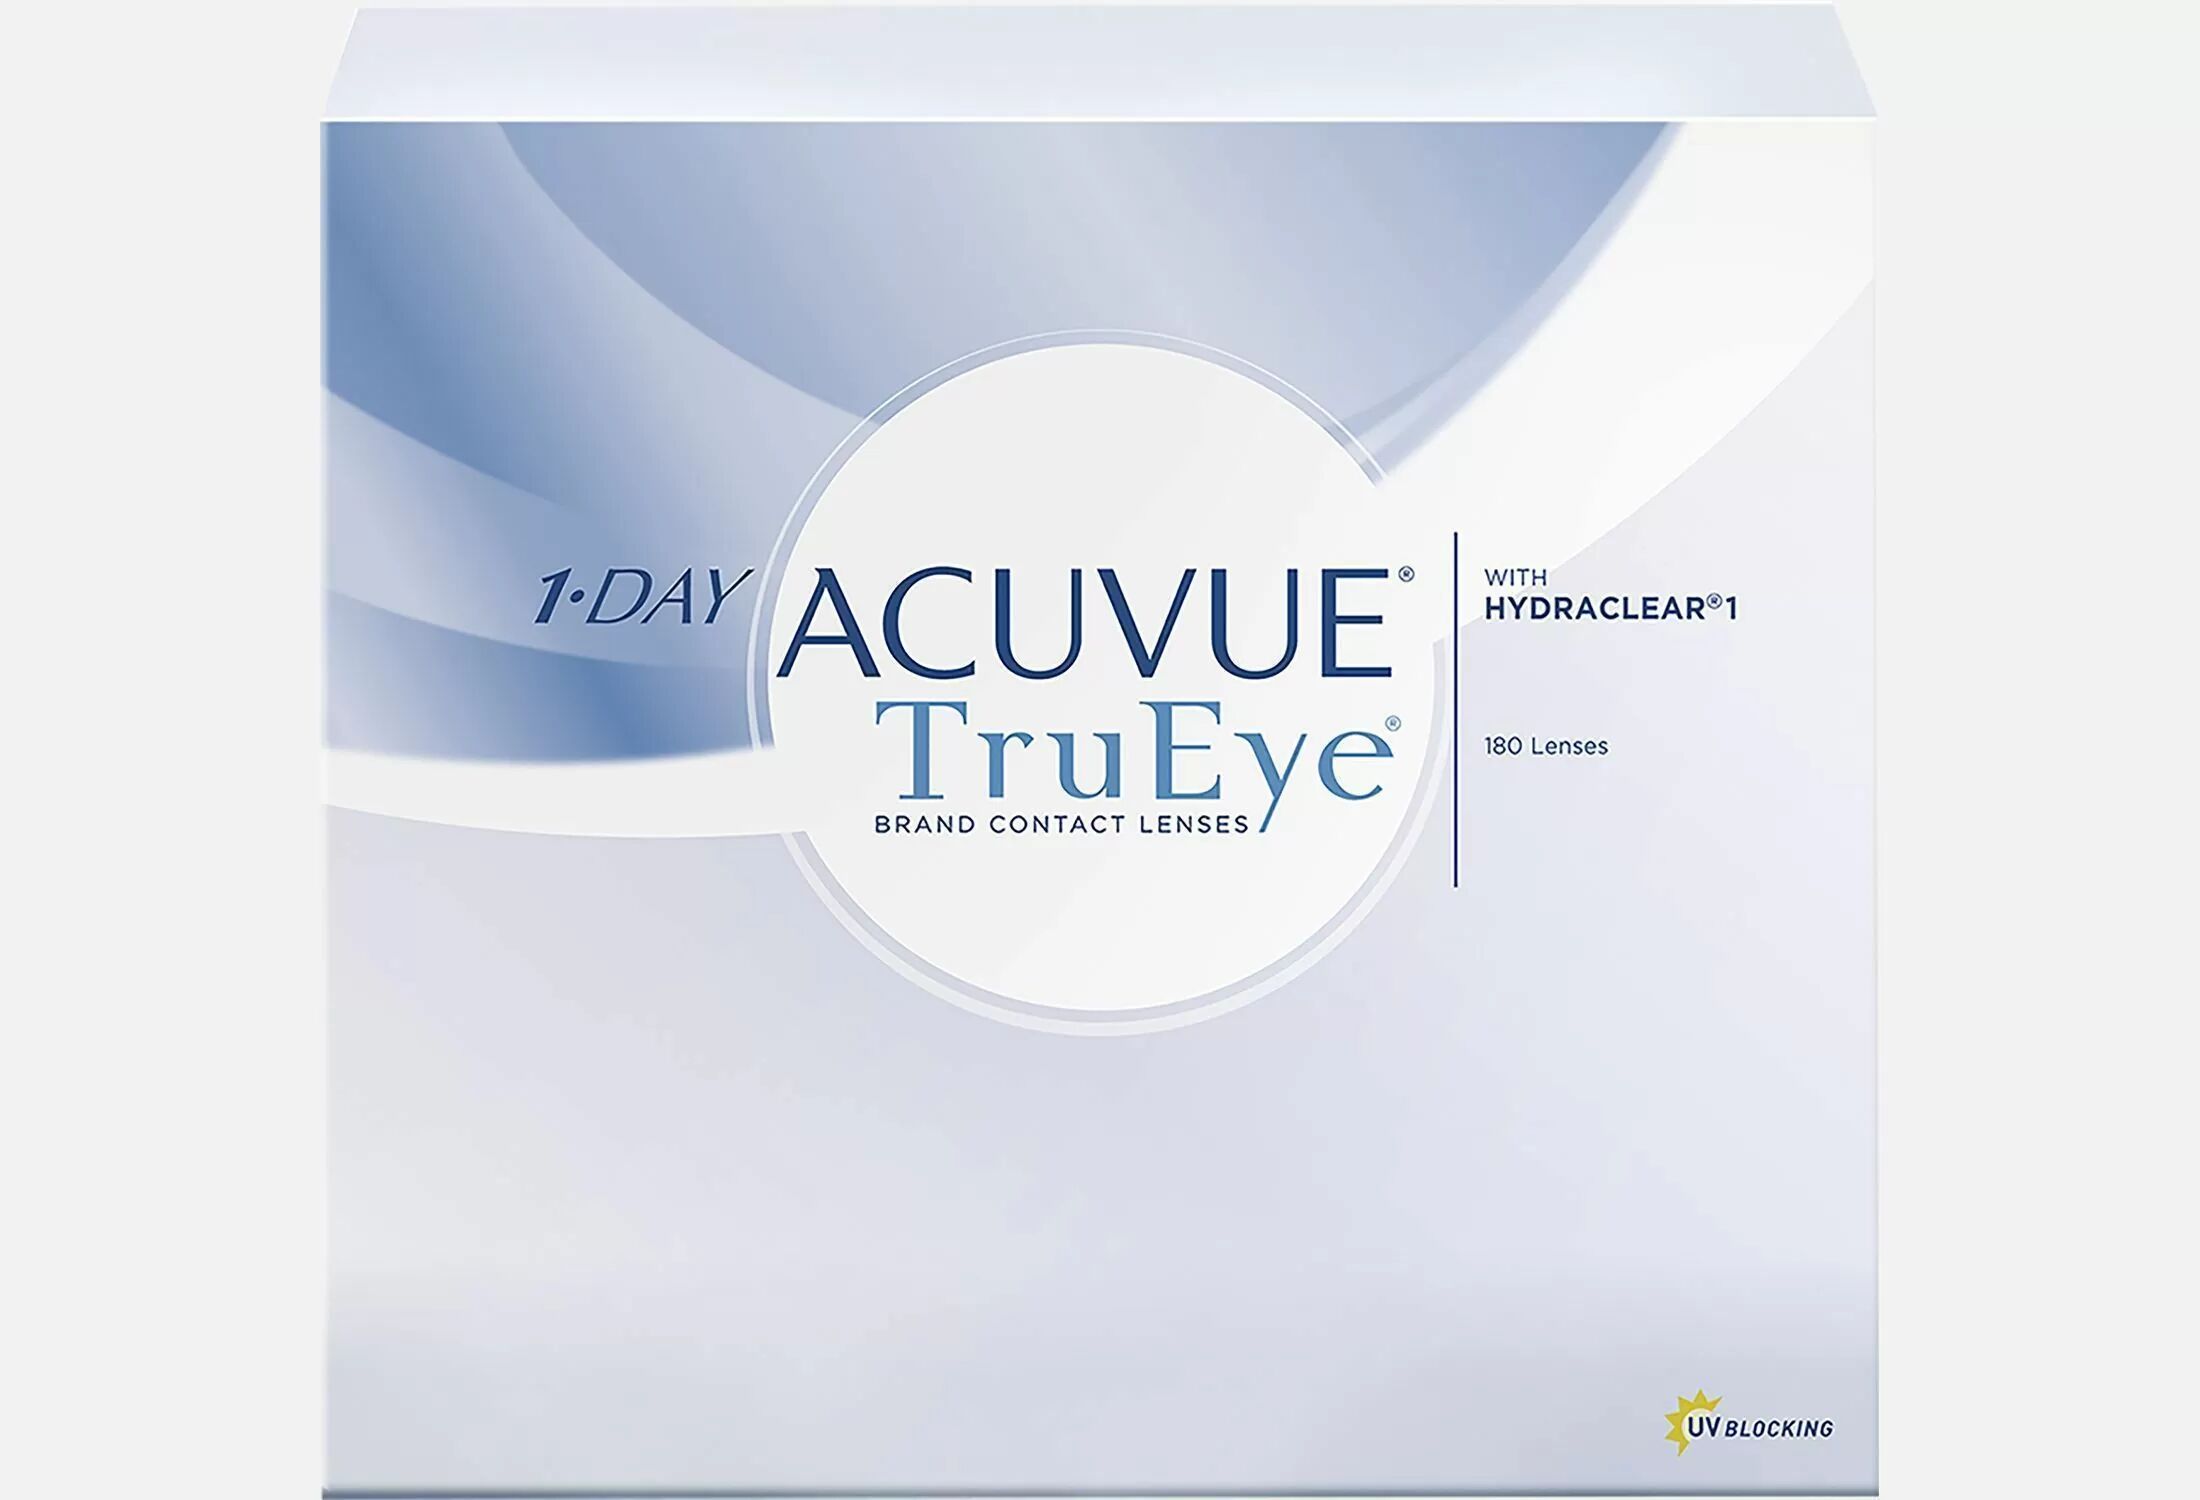 1-Day Acuvue Trueye